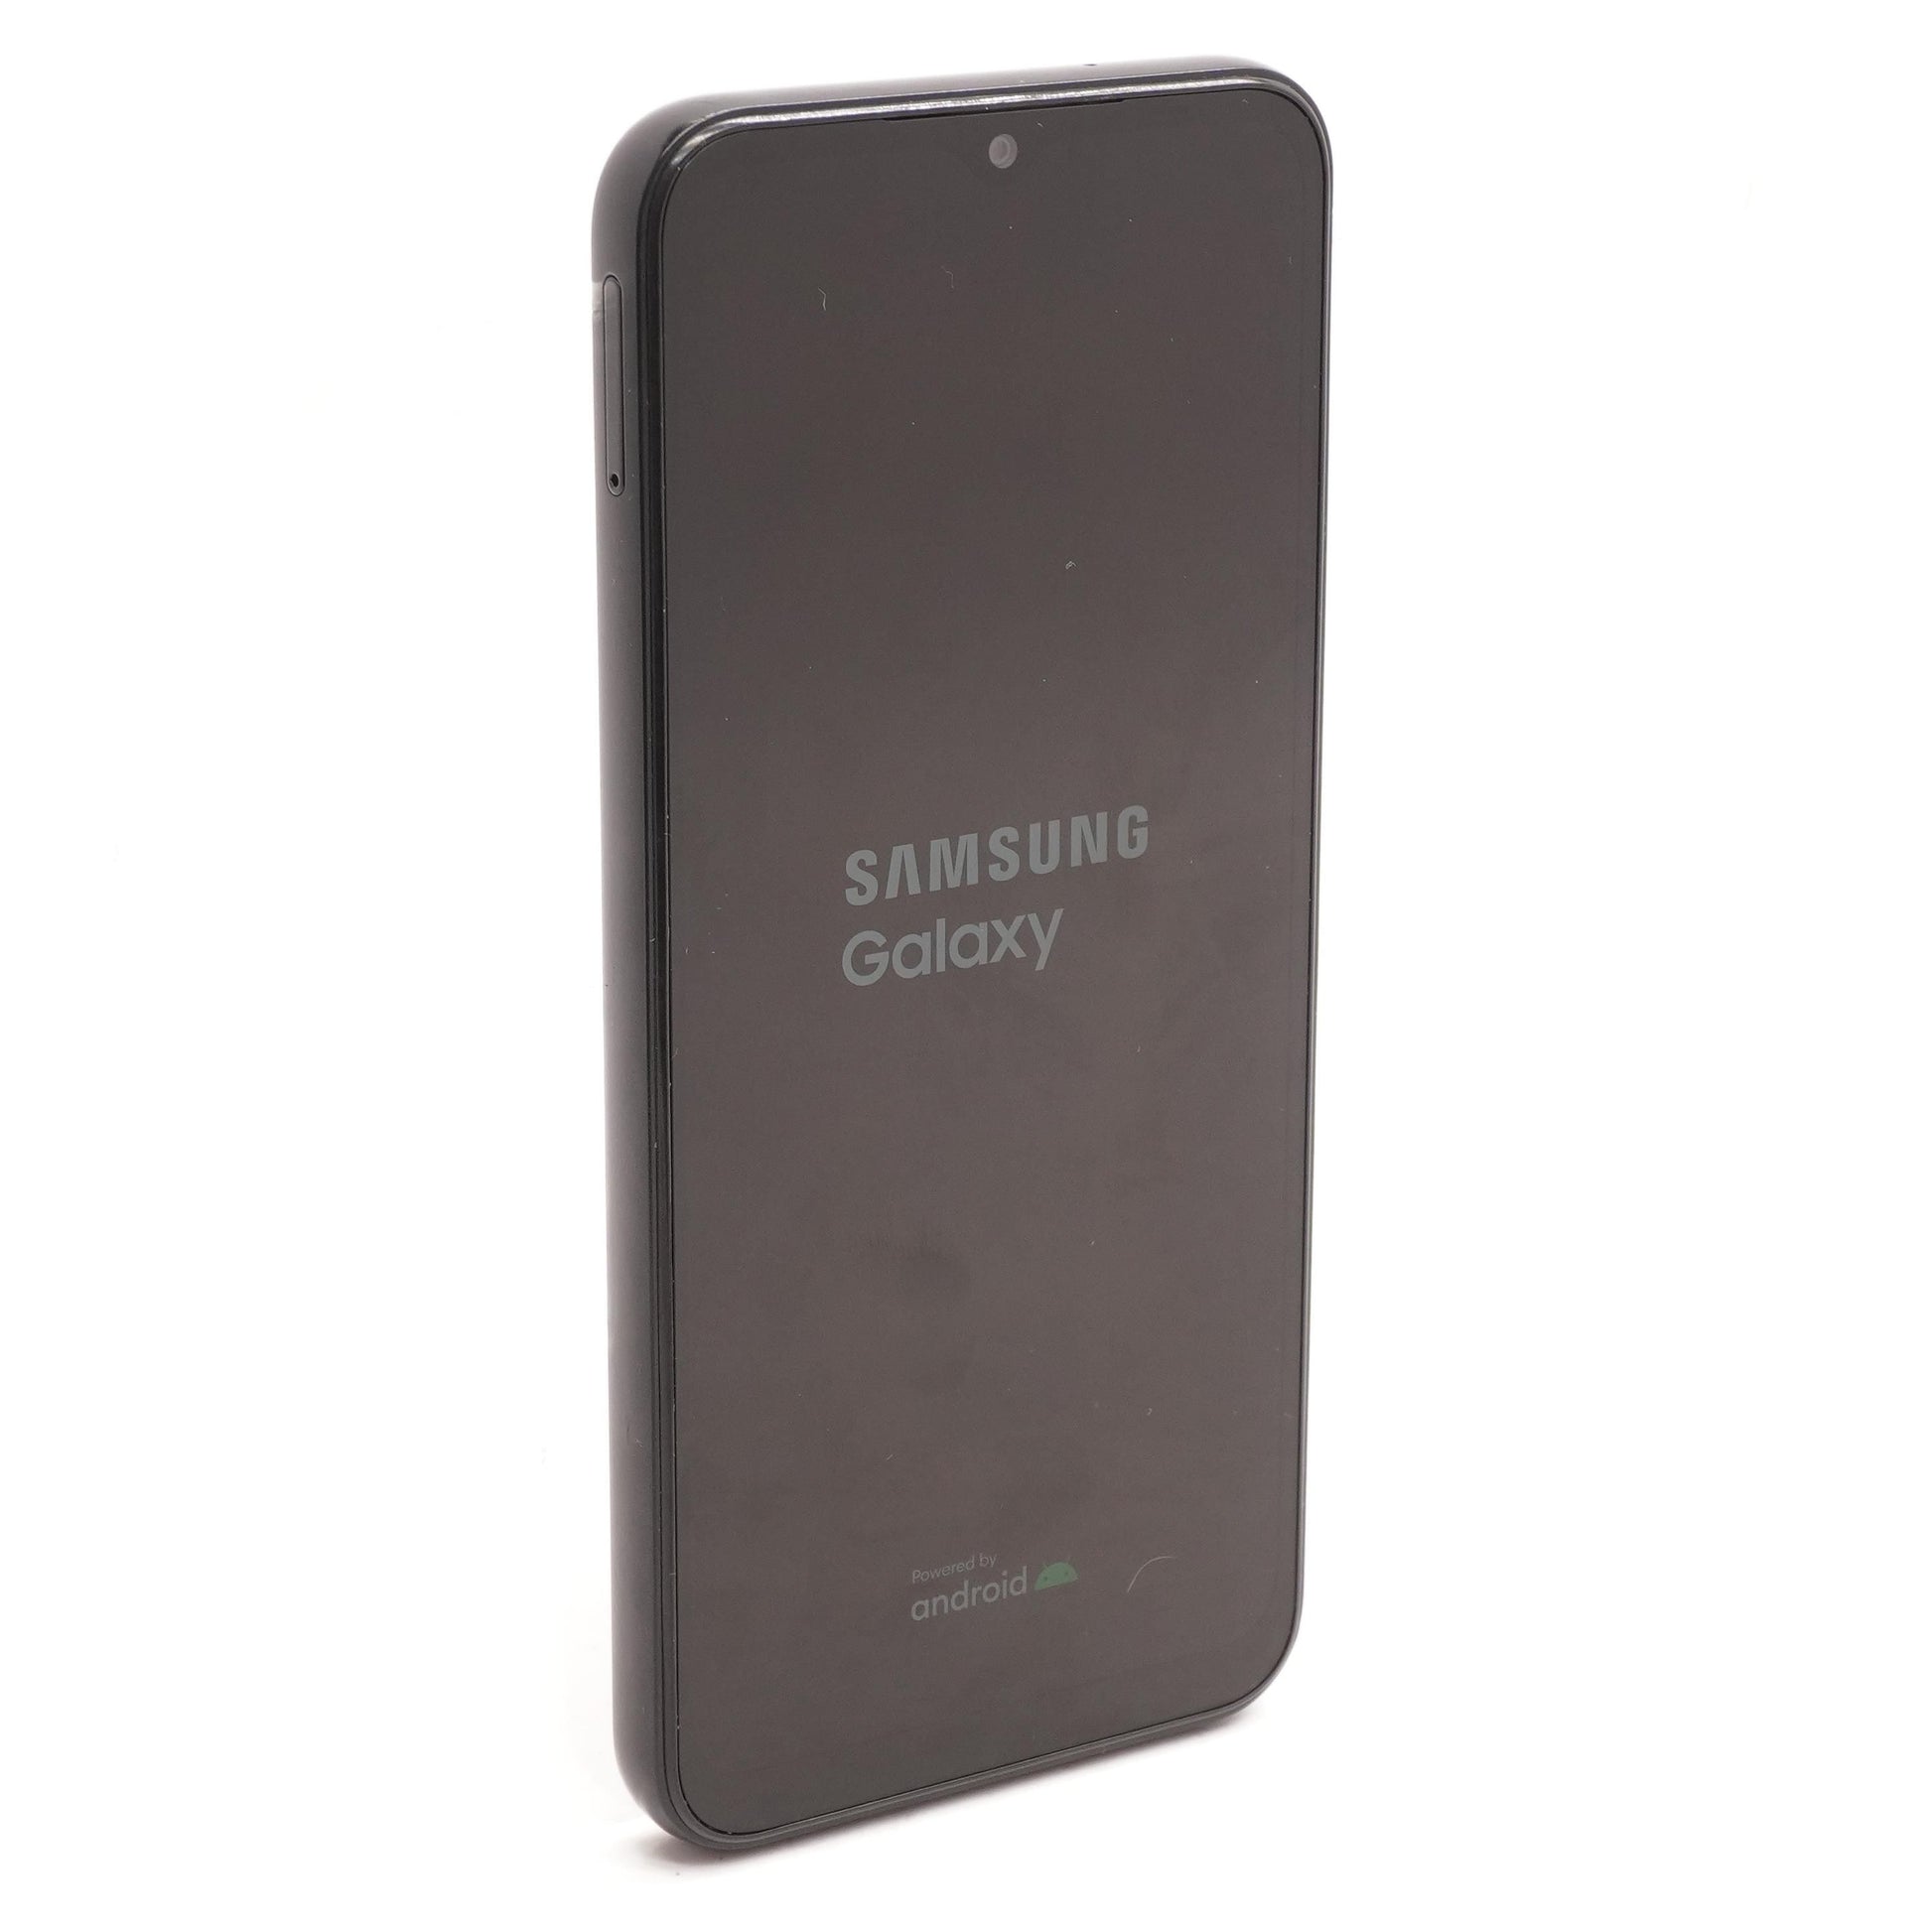 Samsung Galaxy A14 5G, 1 color in 64GB